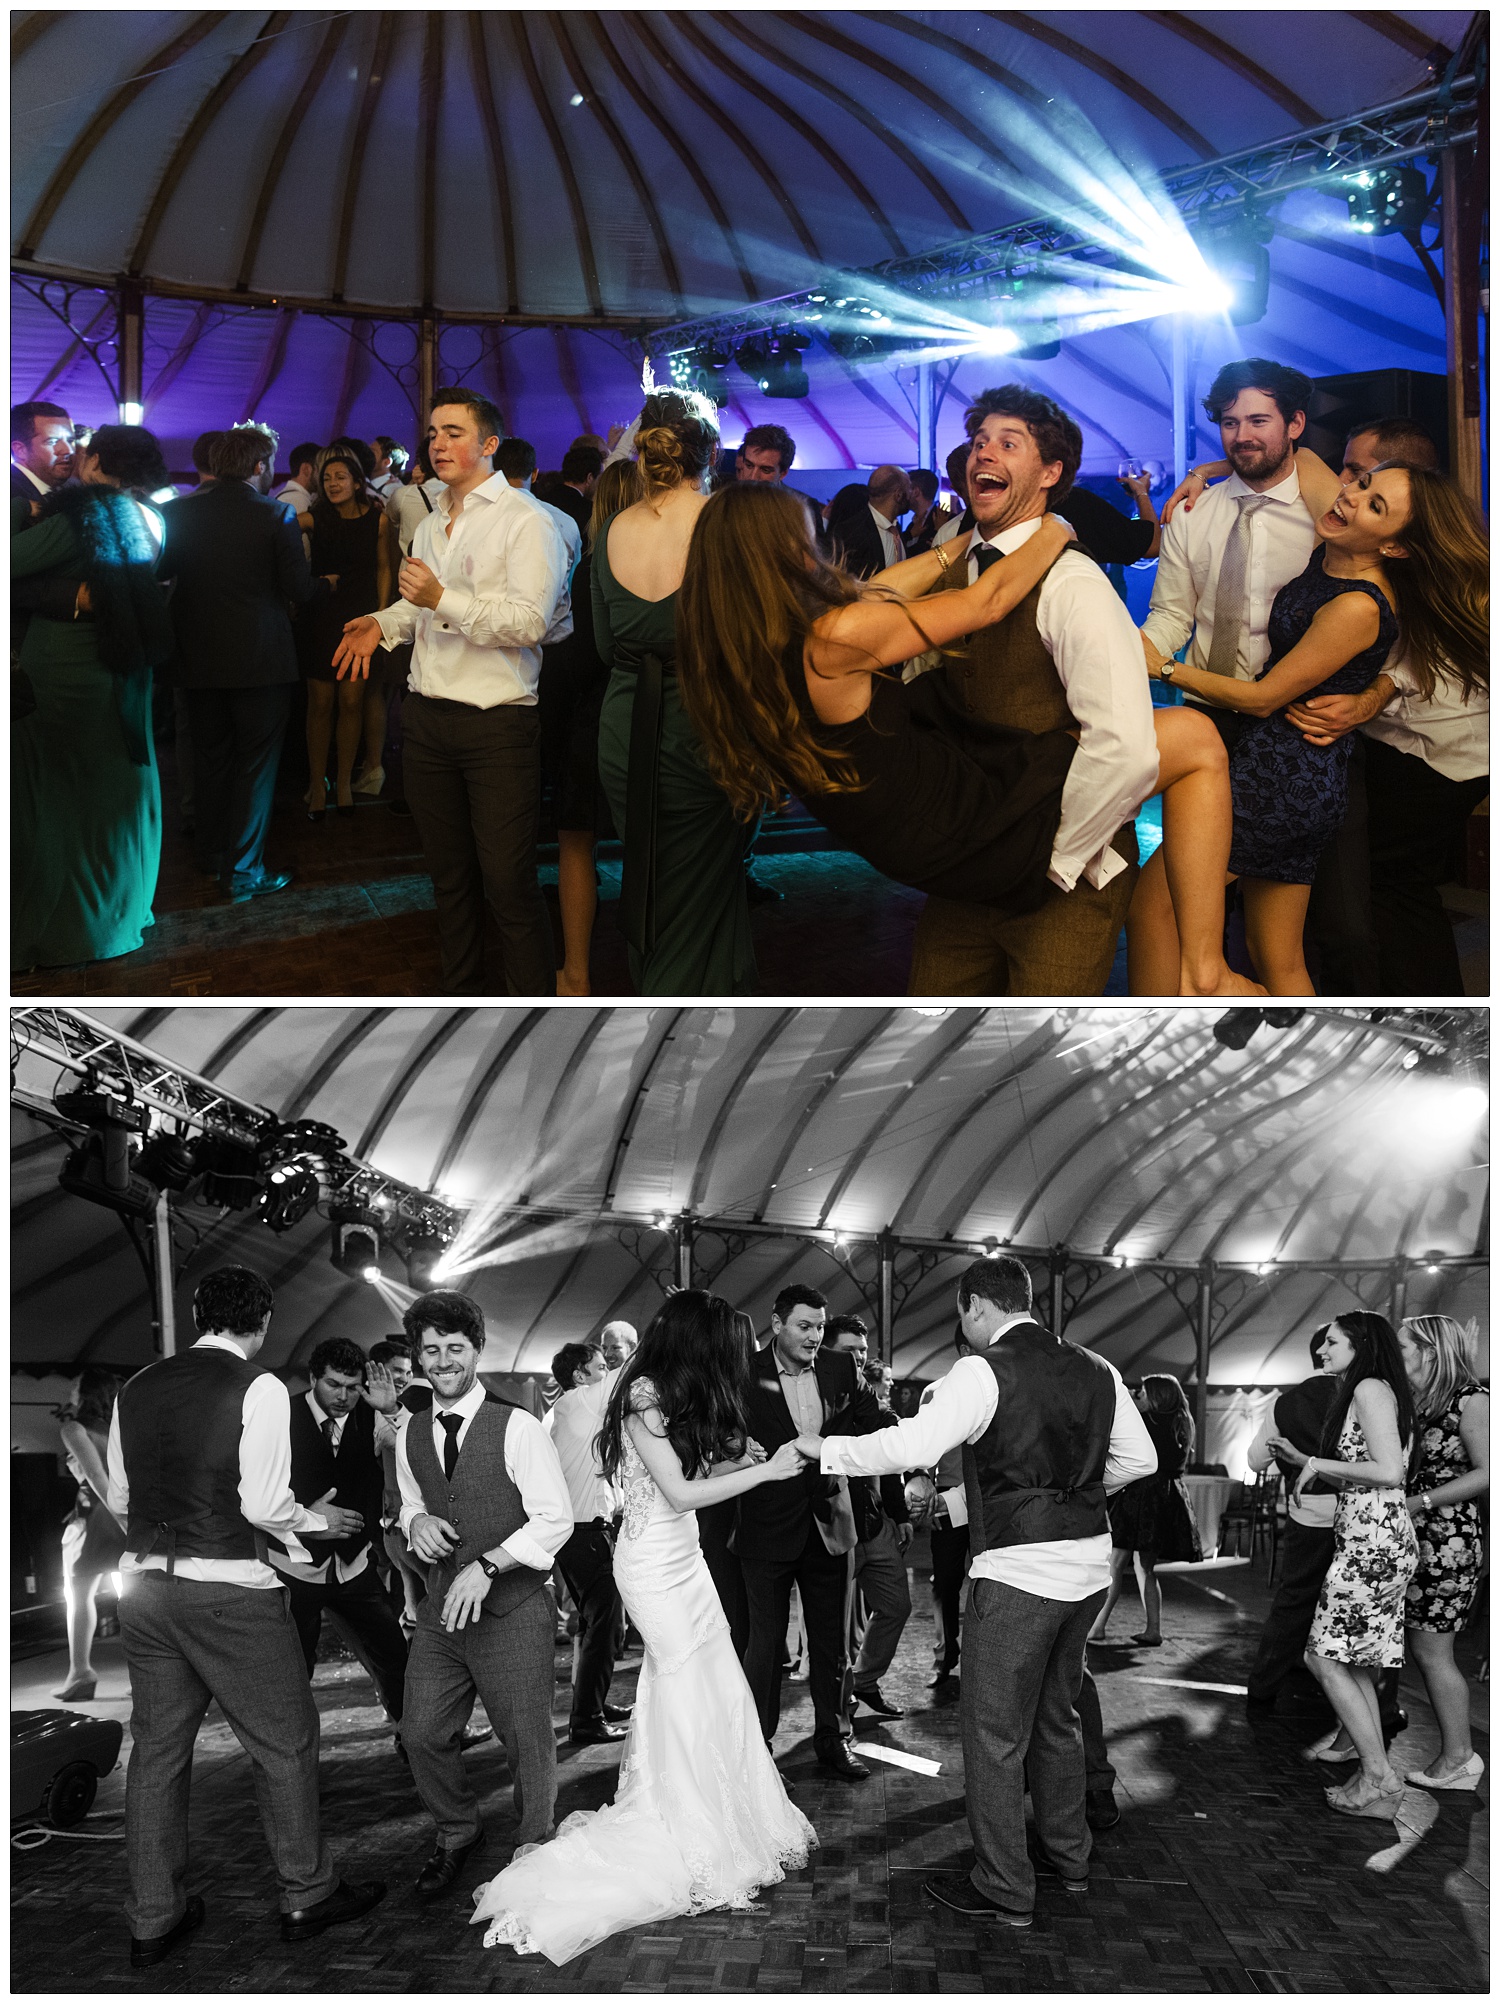 A busy dance floor in a wedding marquee.